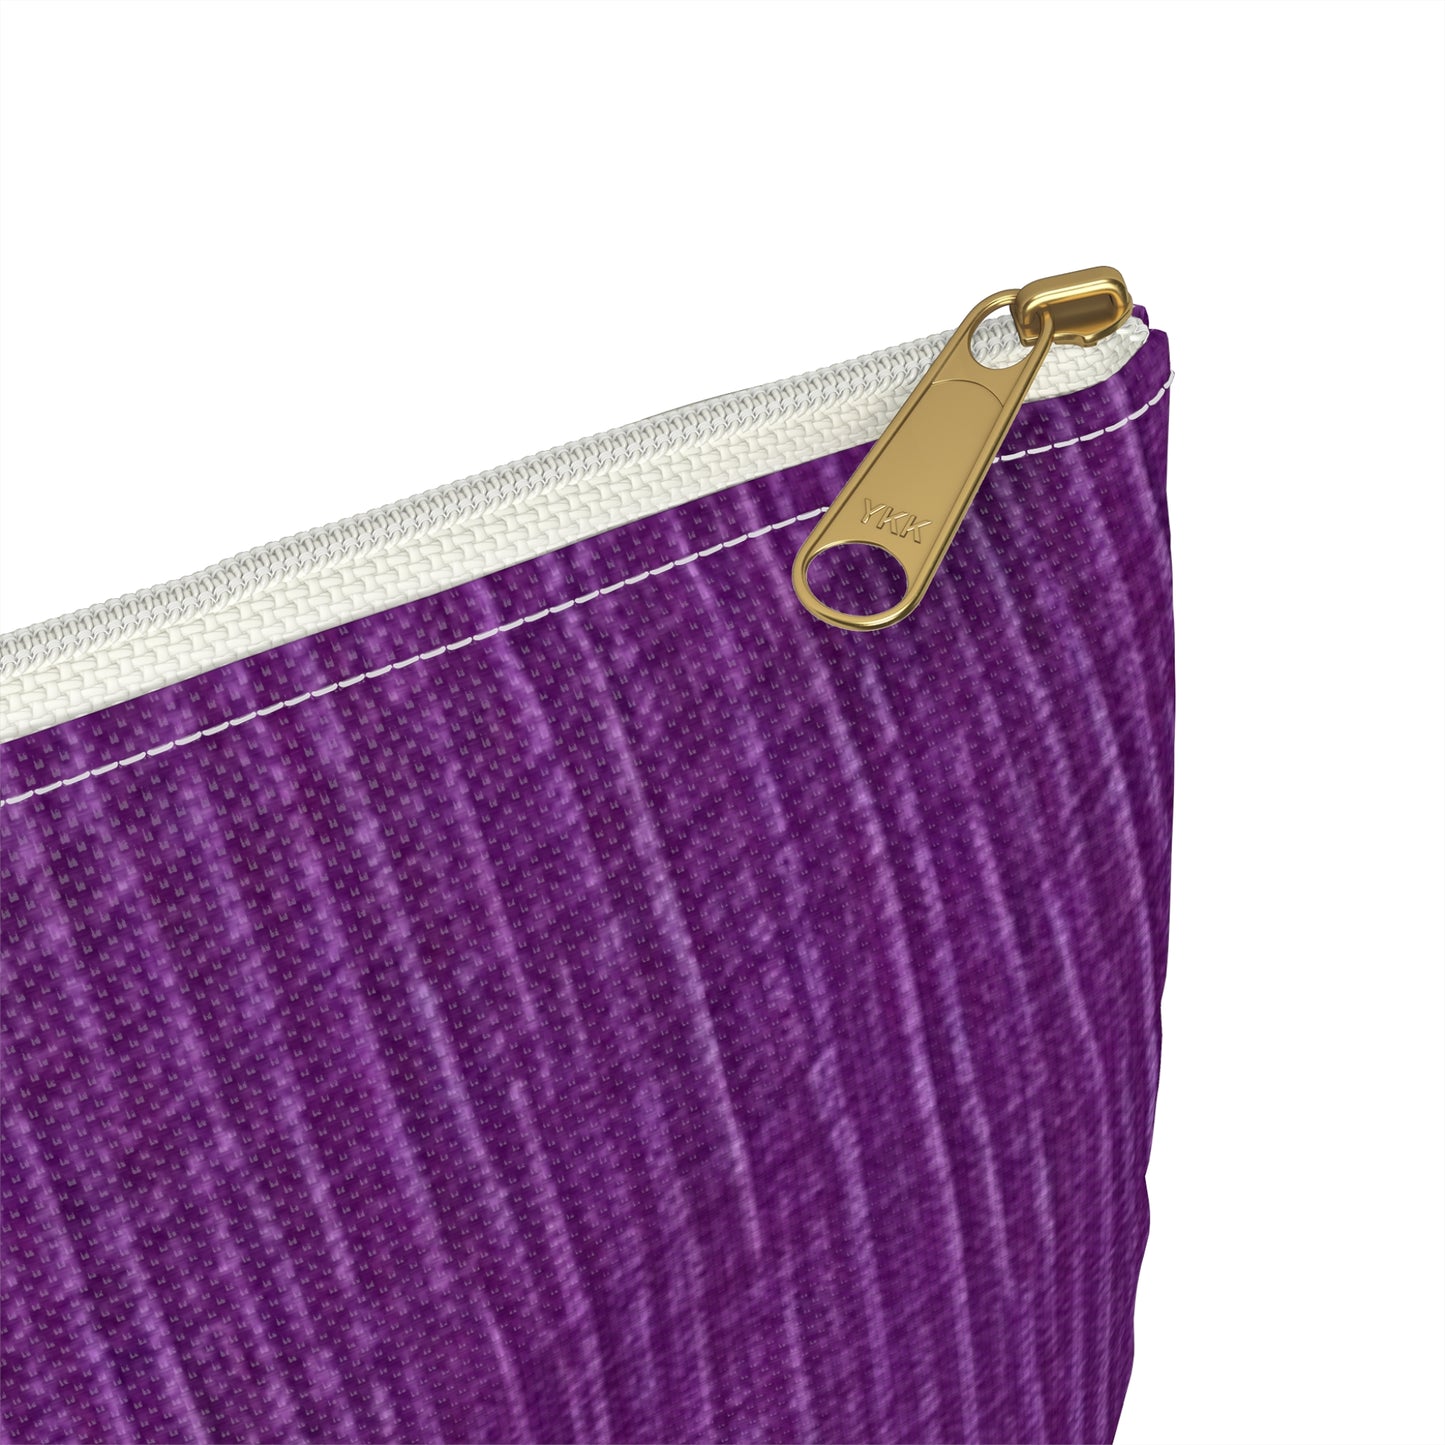 Violet/Plum/Purple: Denim-Inspired Luxurious Fabric - Accessory Pouch